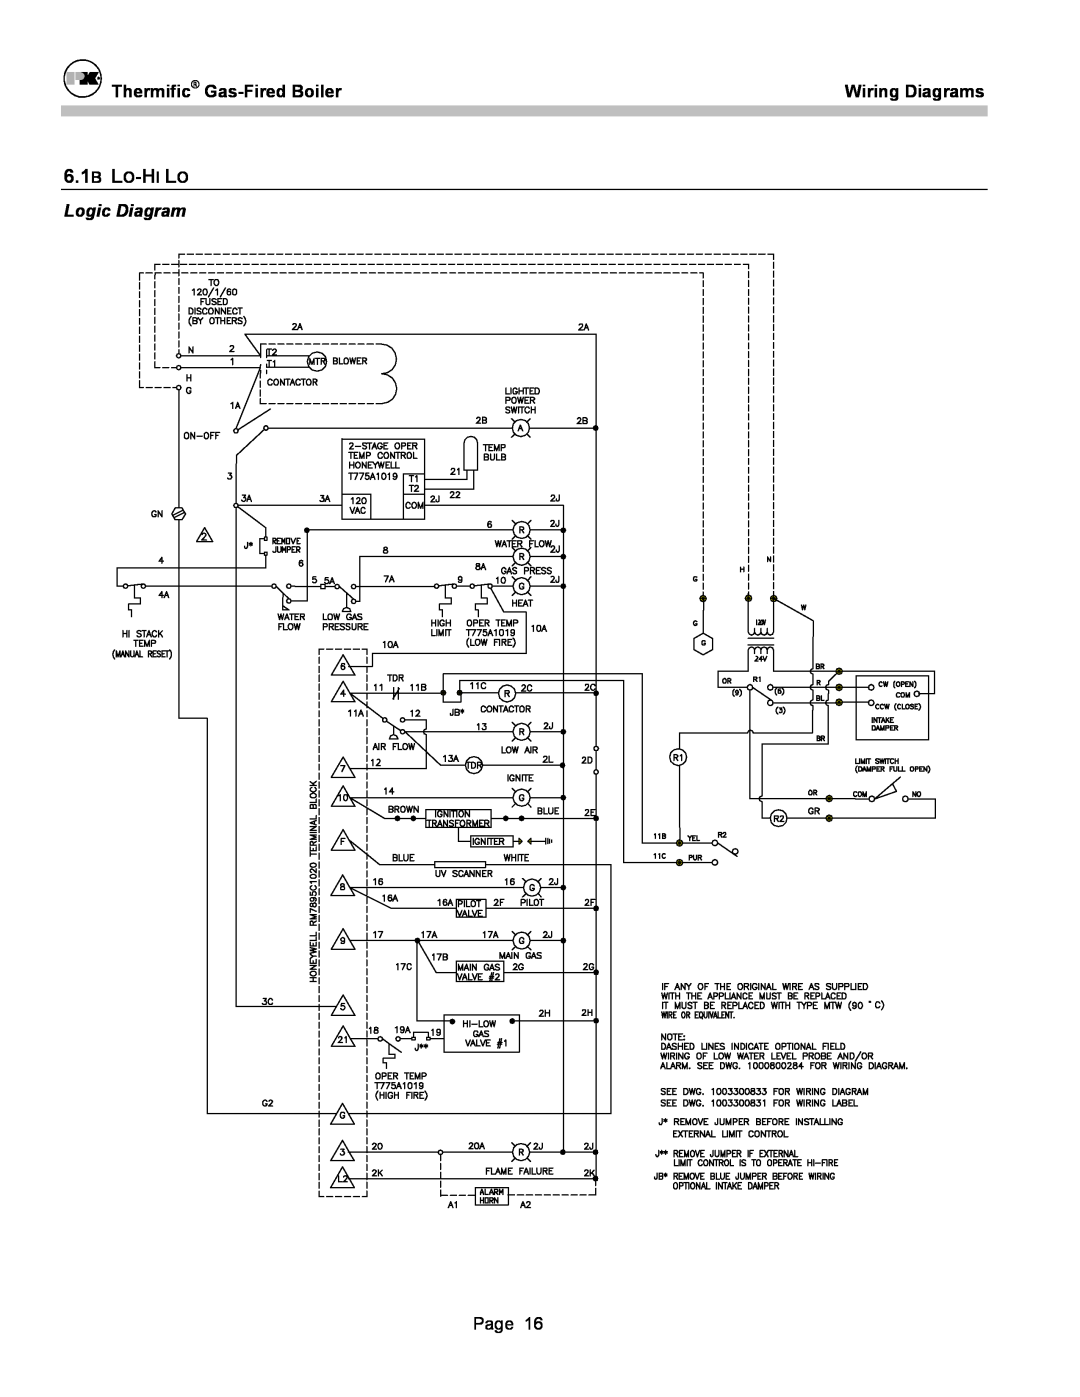 Patterson-Kelley DVSCM-02 owner manual 6.1B LO-HI LO, Thermific Gas-FiredBoiler, Wiring Diagrams, Logic Diagram 